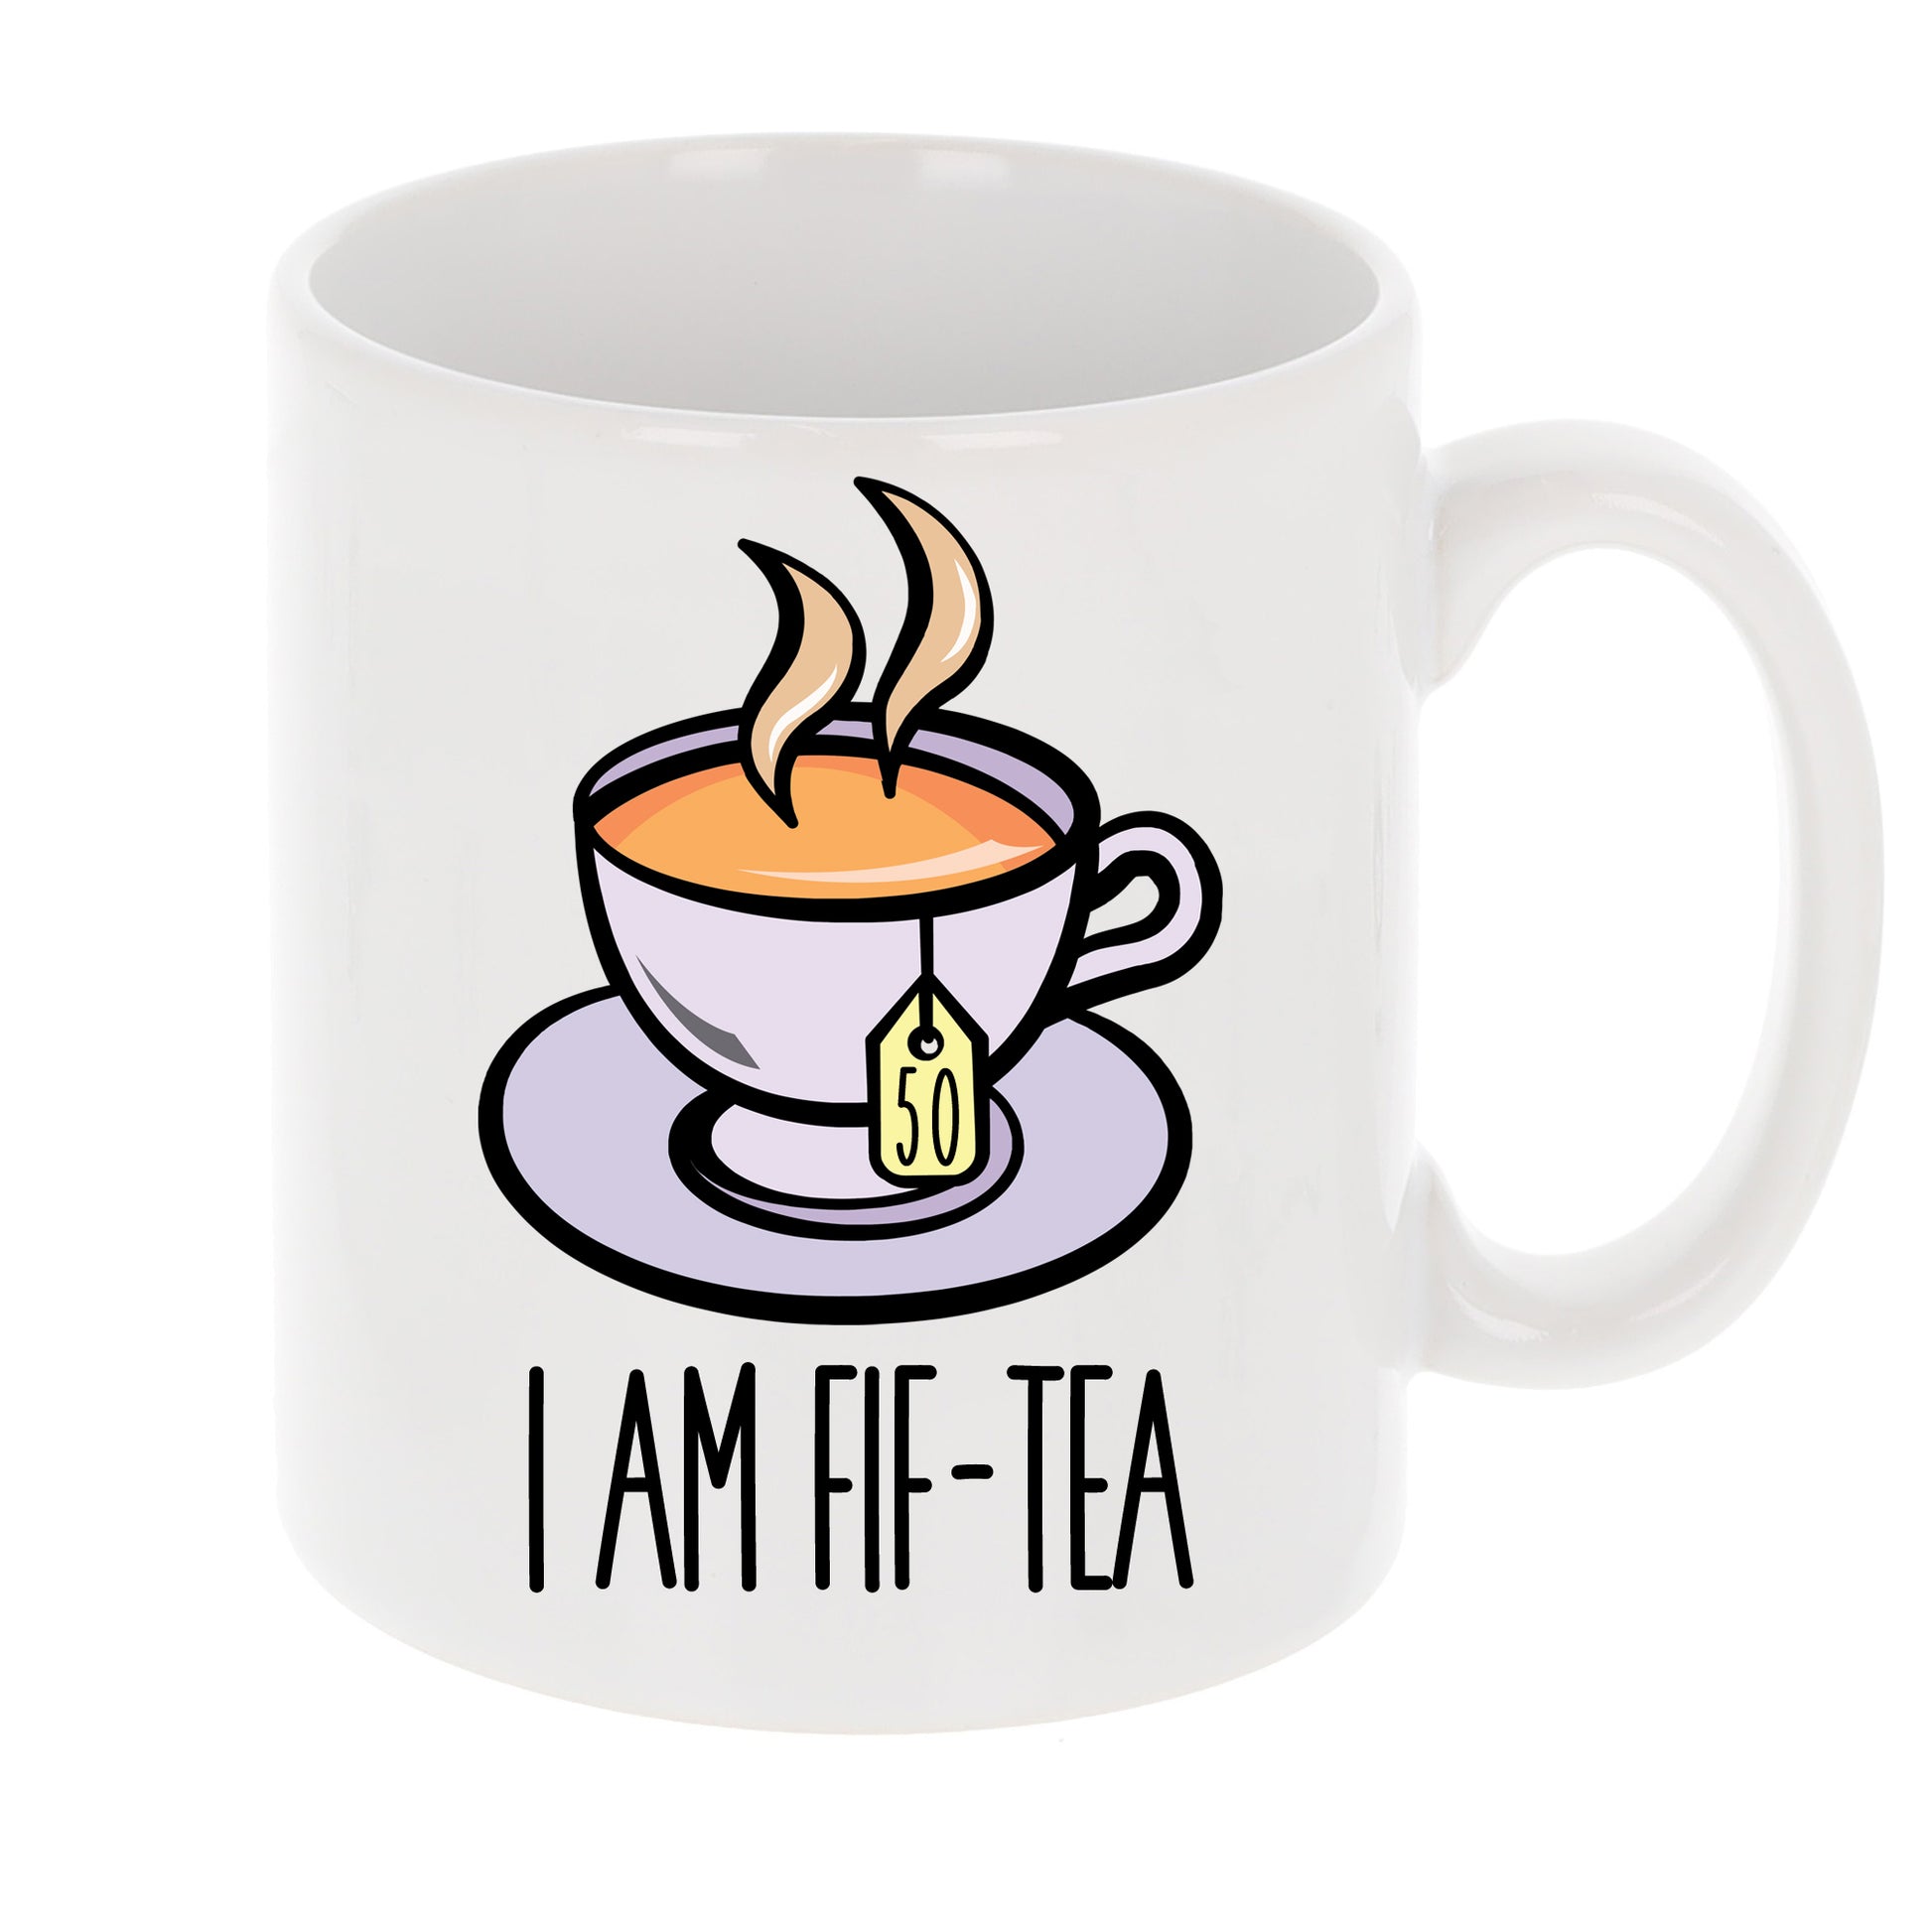 I Am Fif-Tea Funny 50th Birthday Mug Gift for Tea Lovers  - Always Looking Good - Mug Only  